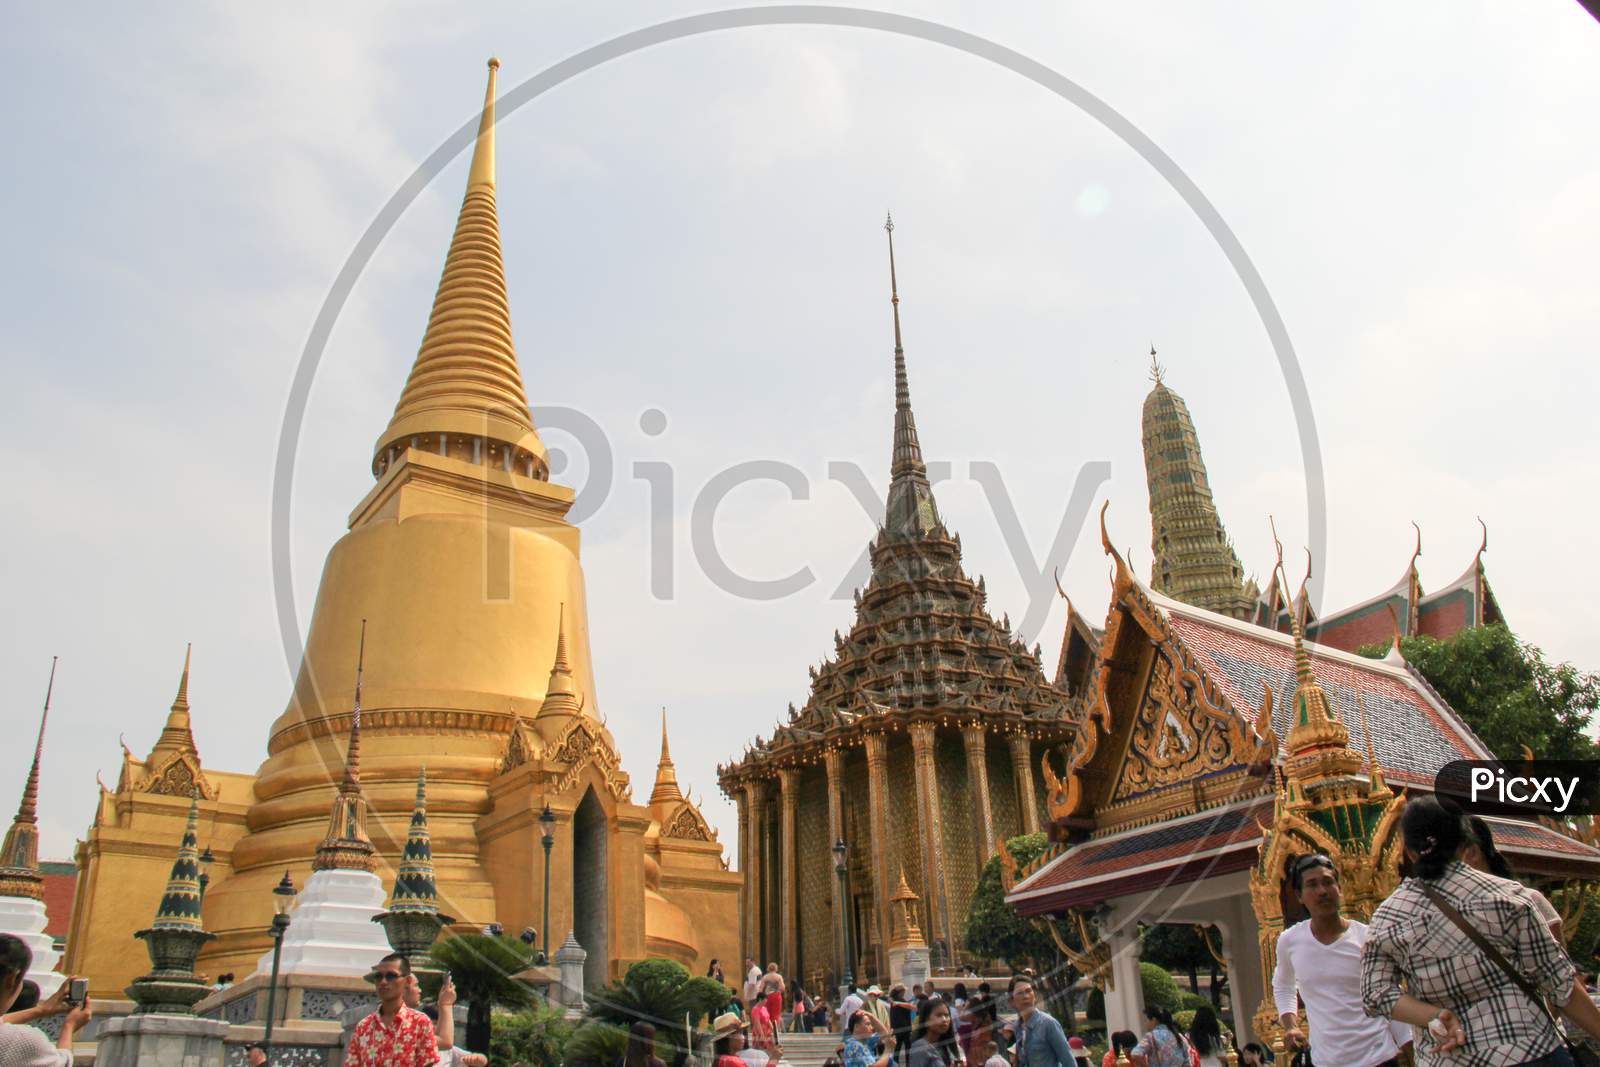 A Shwedagon Pagoda Temple in Myanmar